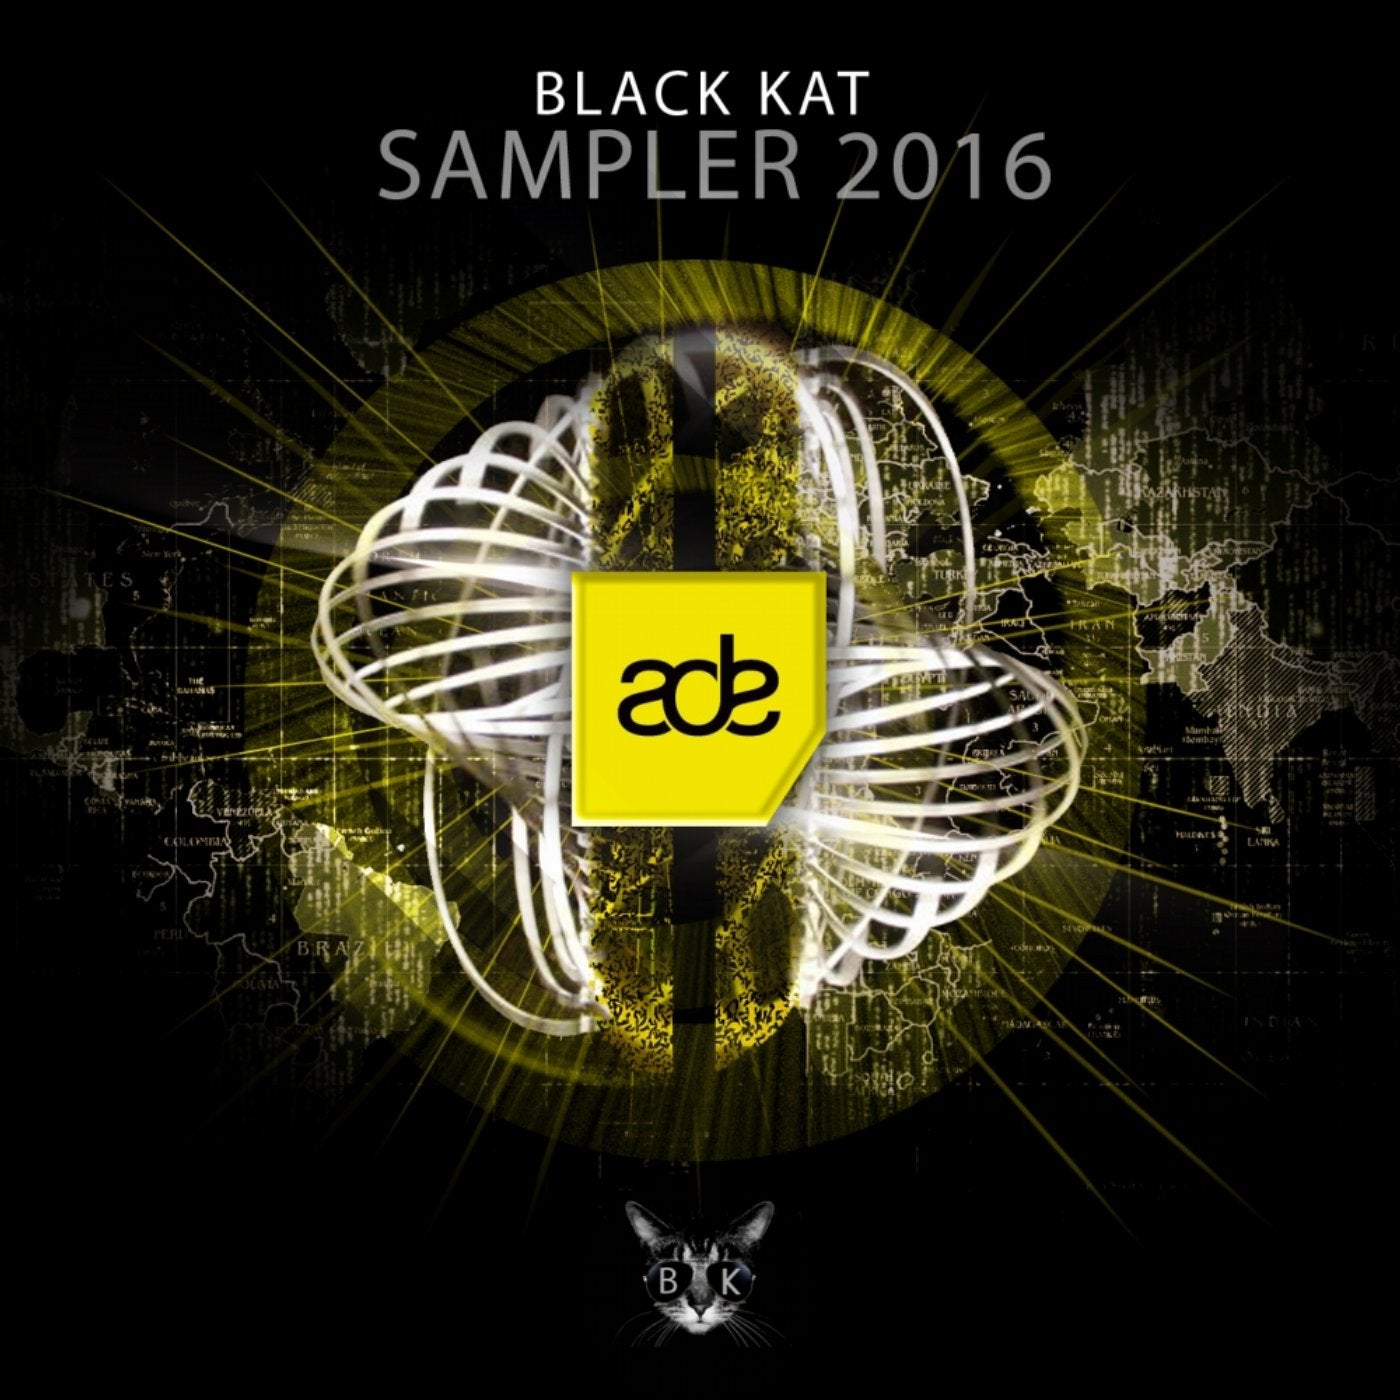 Black Kat Sampler 2016